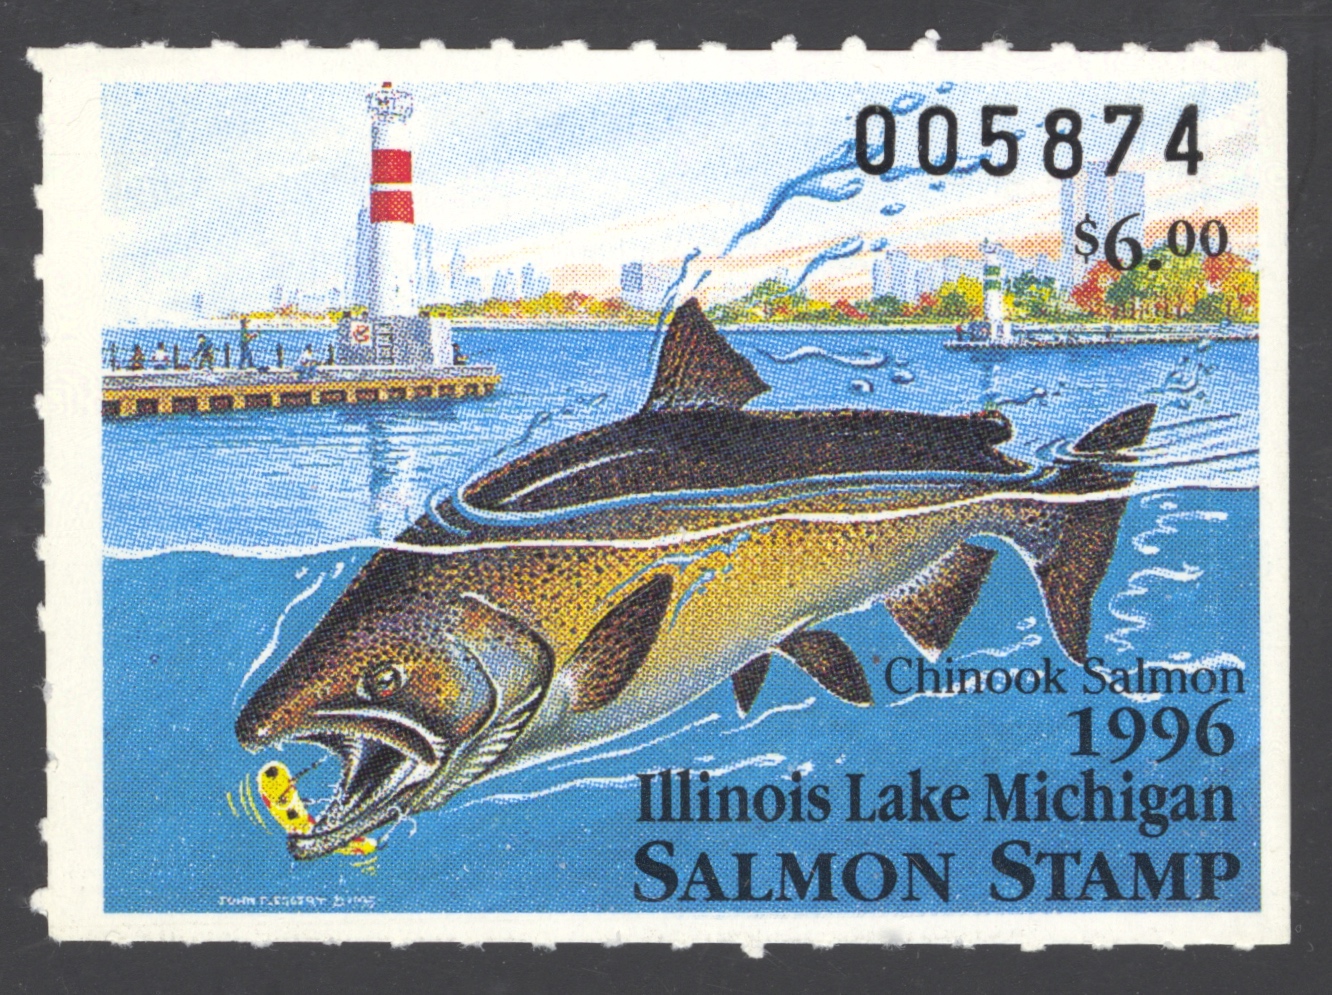 1996 Illinois Lake Michigan Salmon